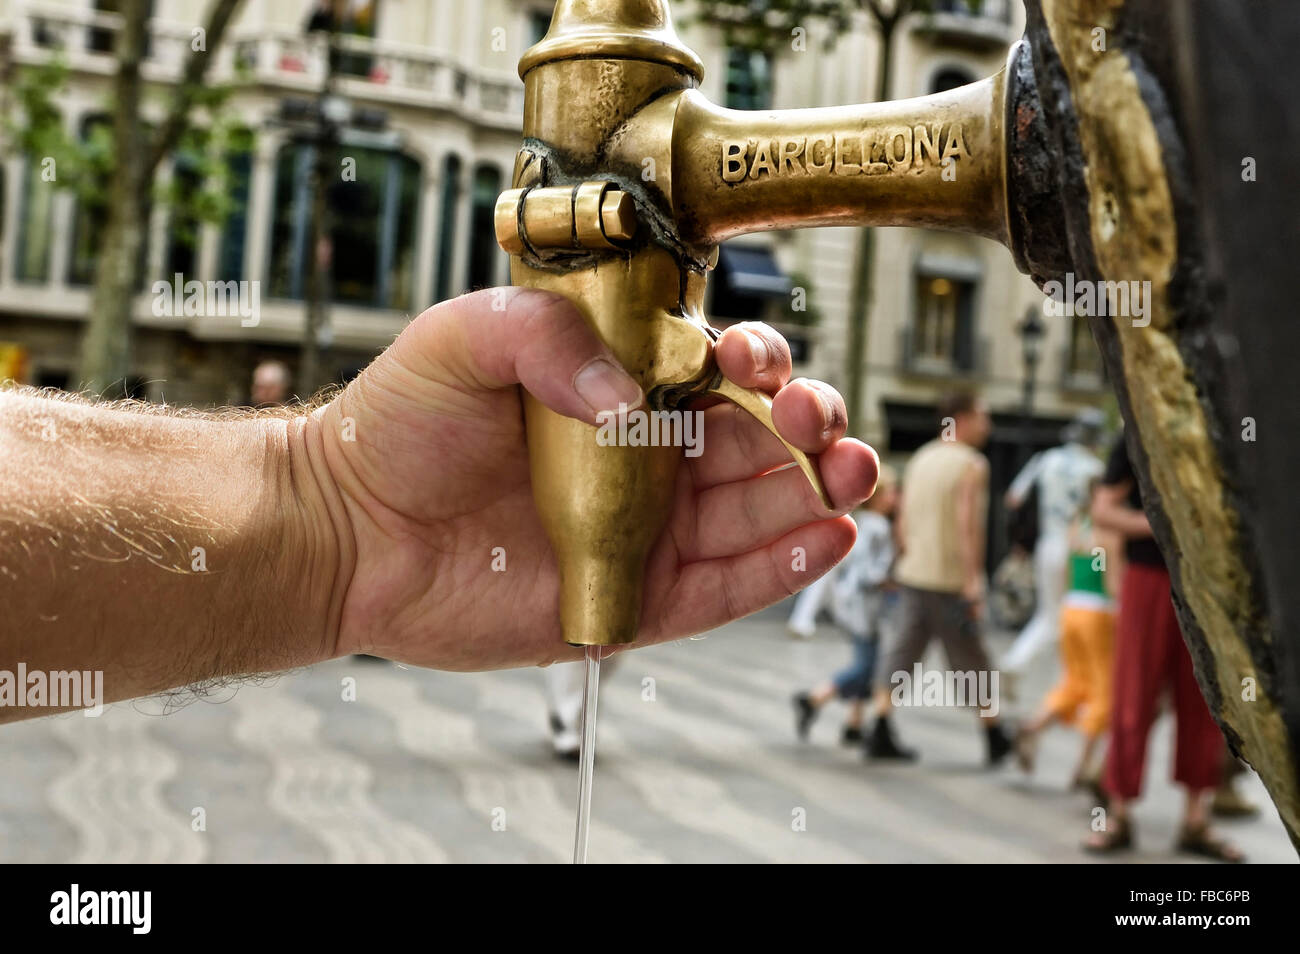 Der Brunnen Font de Canaletes. La Rambla. Barcelona. Katalonien. Spanien Stockfoto